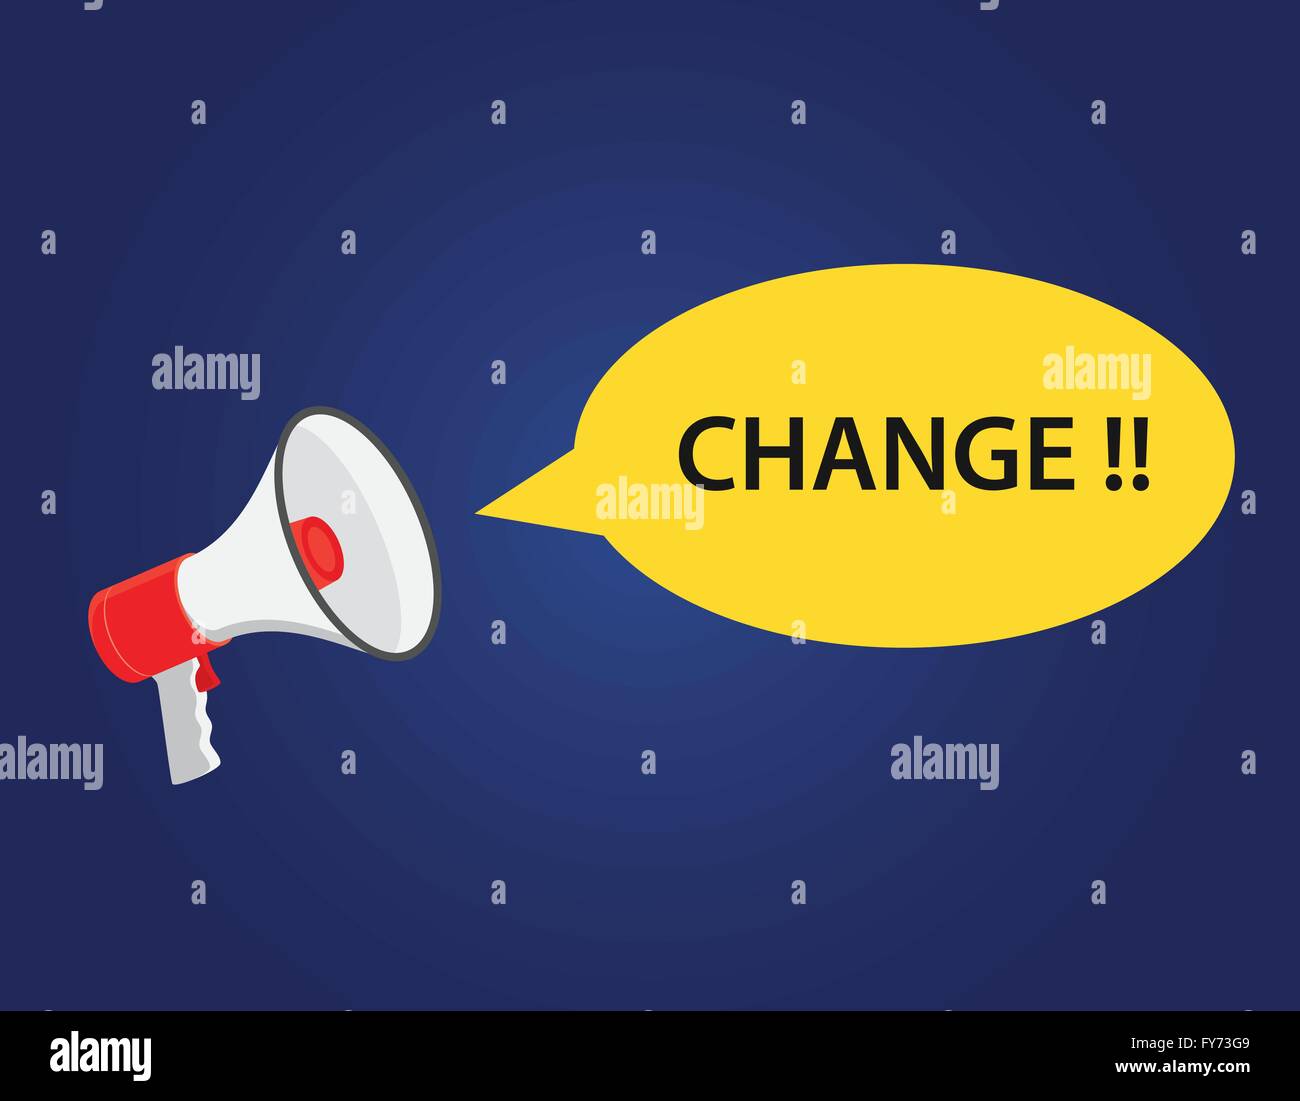 change illustration with megaphone or loudspeaker Stock Vector